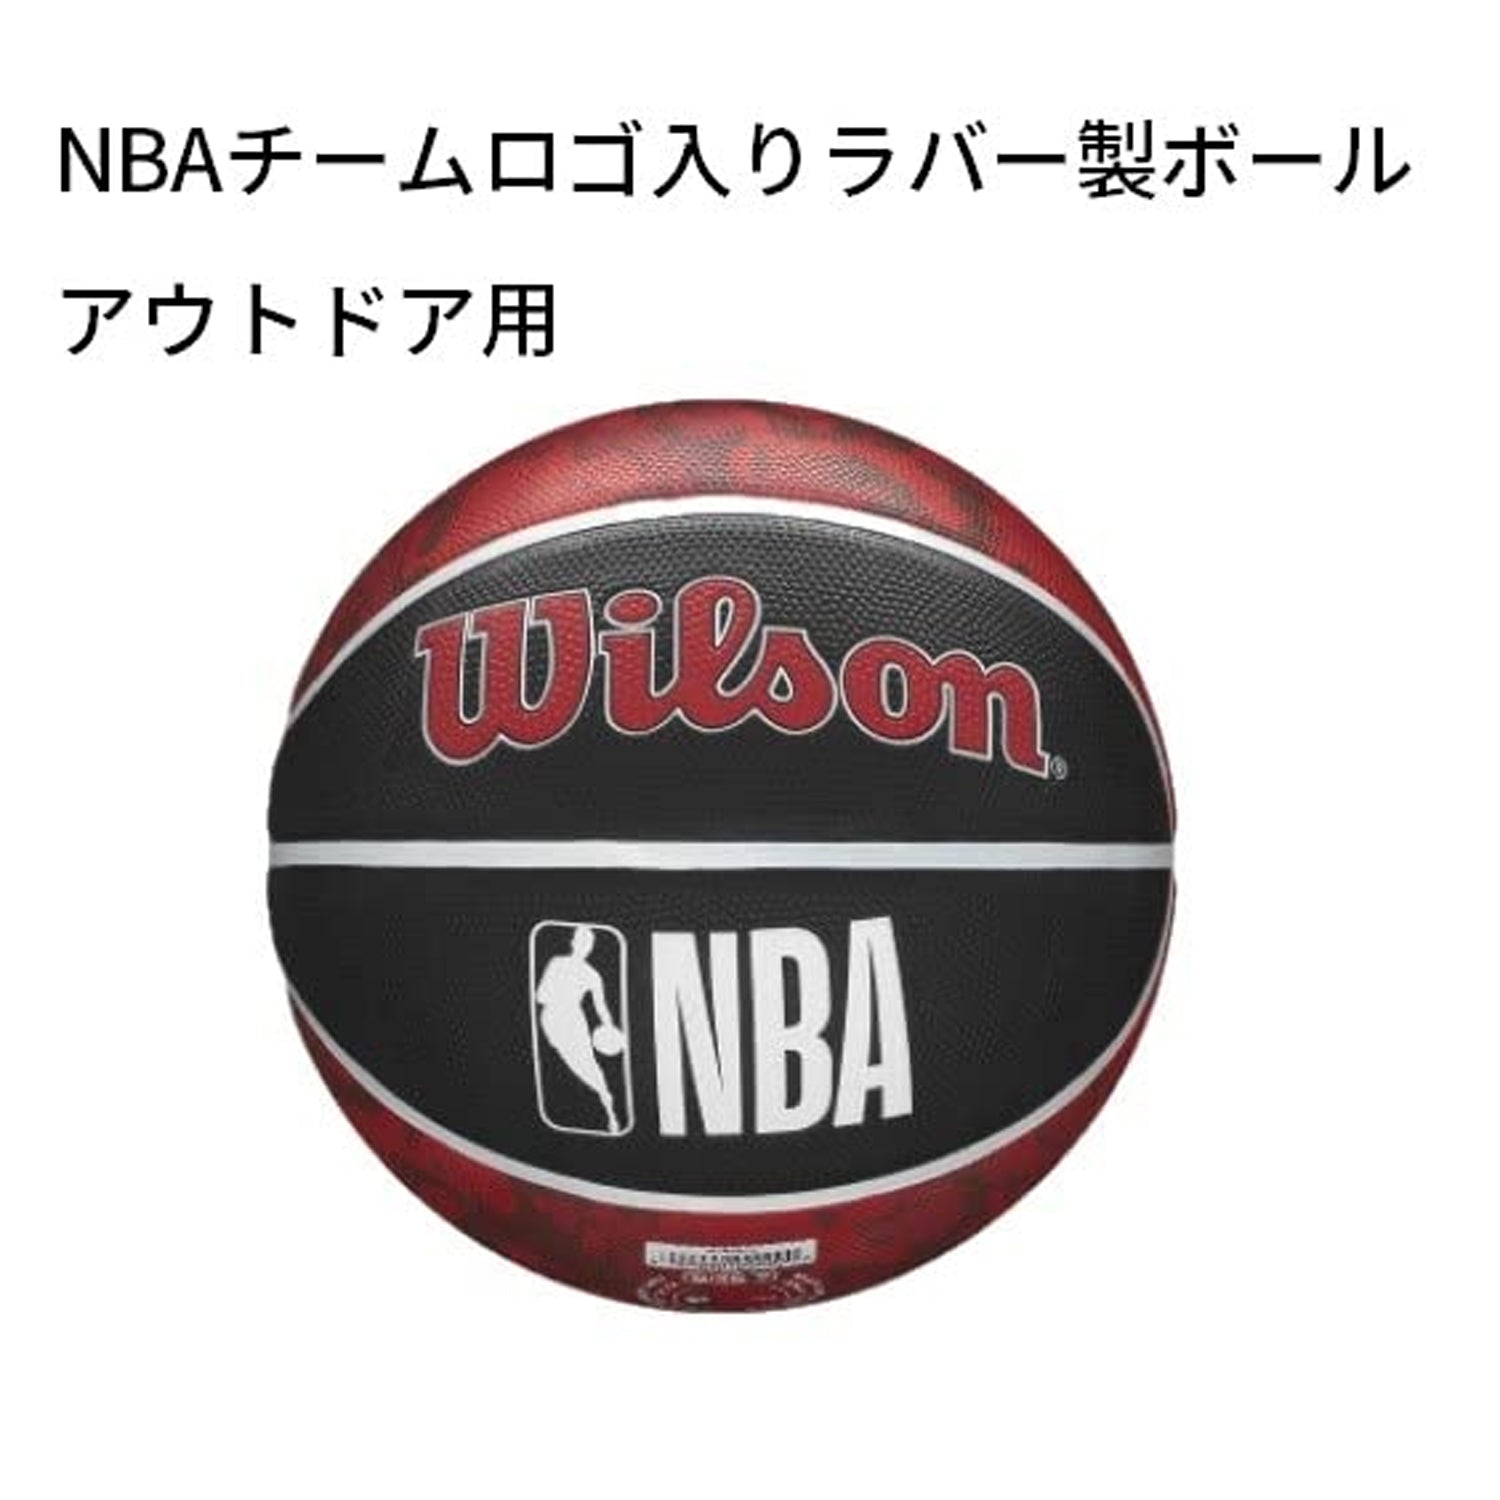 Wilson NBA Team Tiedye Chicago Bulls Basketball, Size 7 (Red) - Best Price online Prokicksports.com